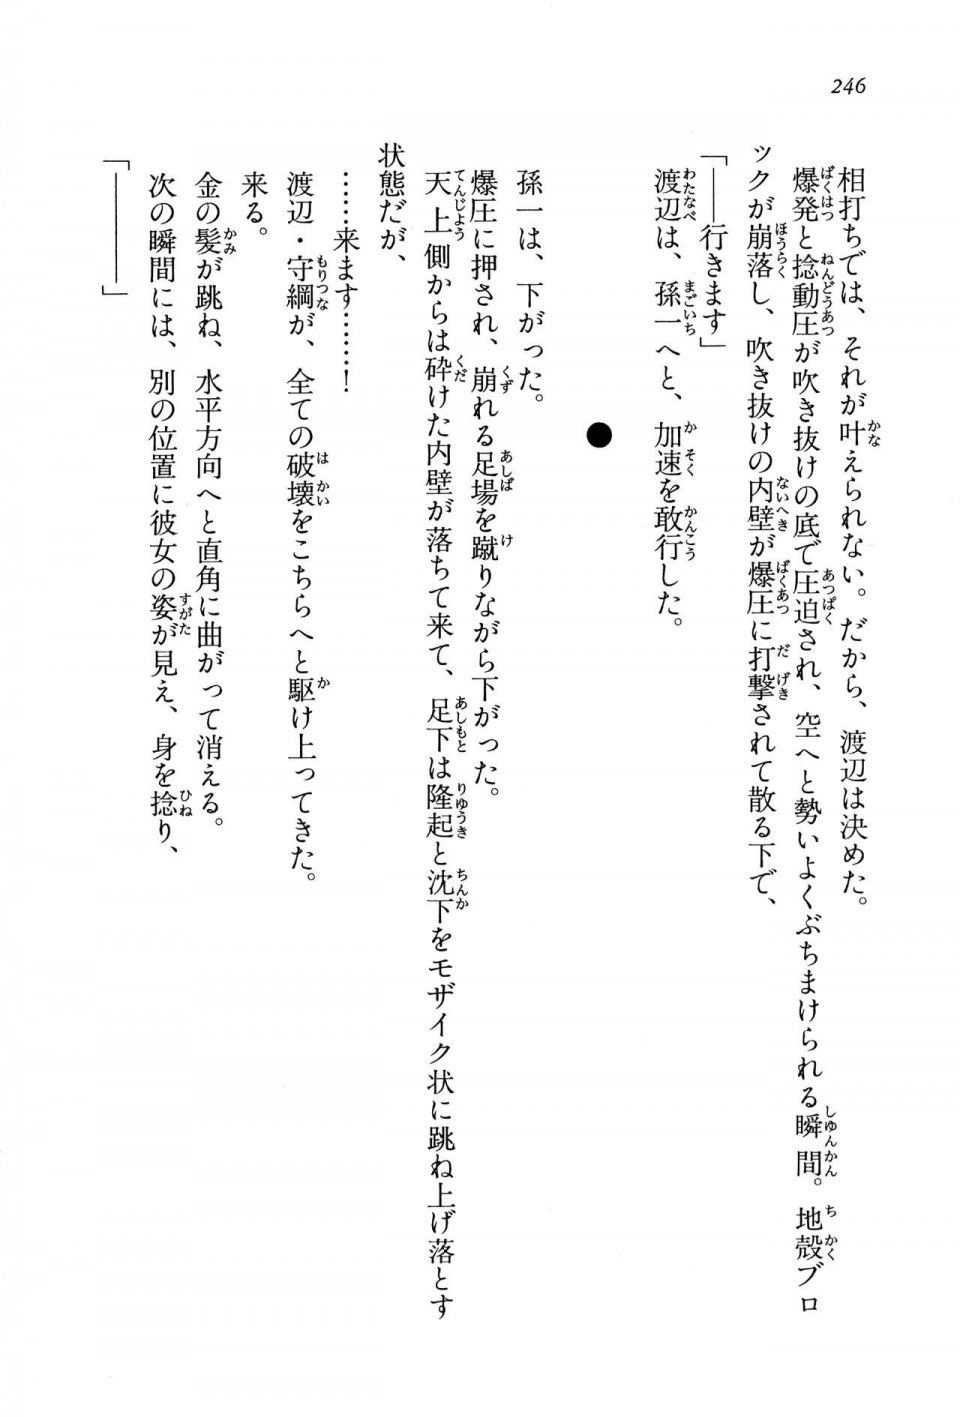 Kyoukai Senjou no Horizon BD Special Mininovel Vol 8(4B) - Photo #250